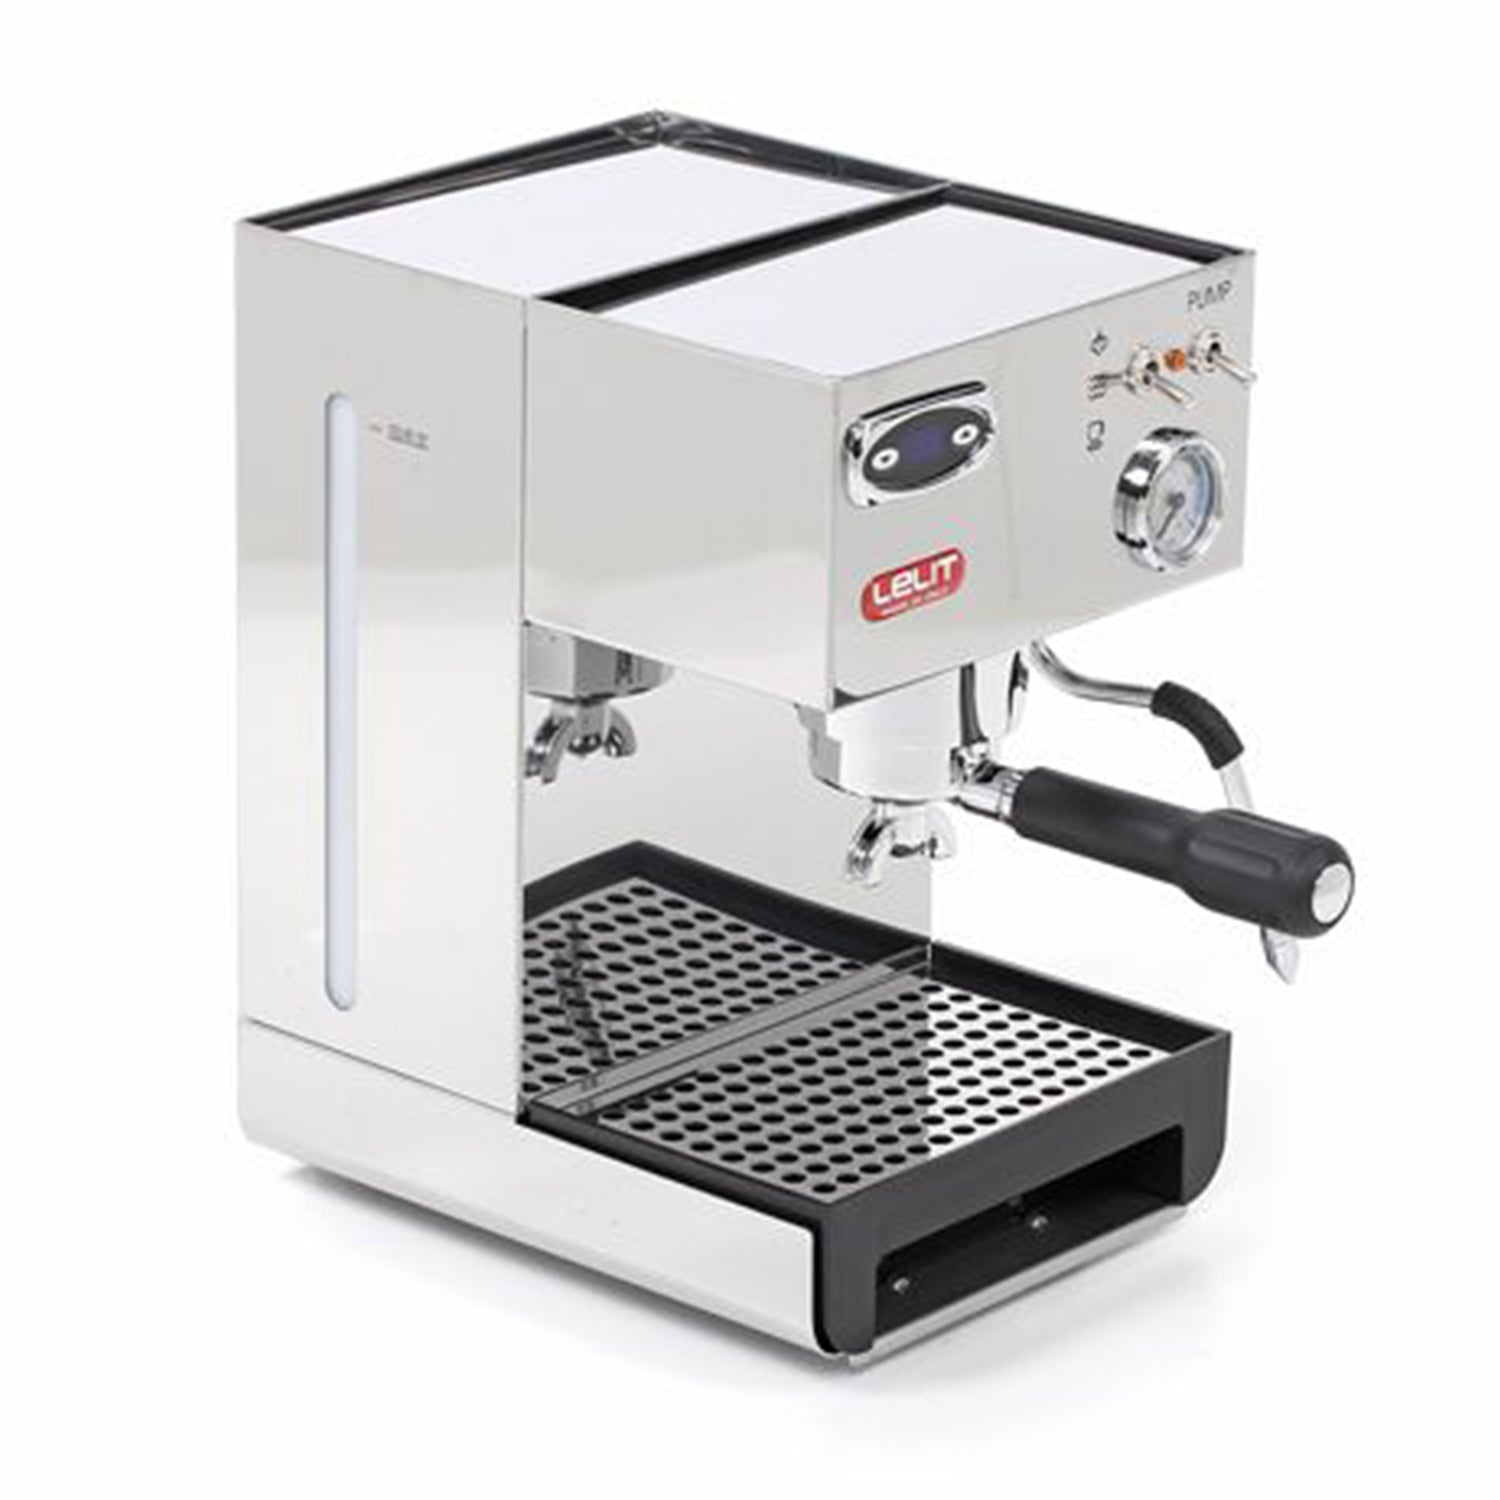 Lelit Anna 1 PL41LEM Semi Automatic Espresso Machine – Home Coffee Solutions